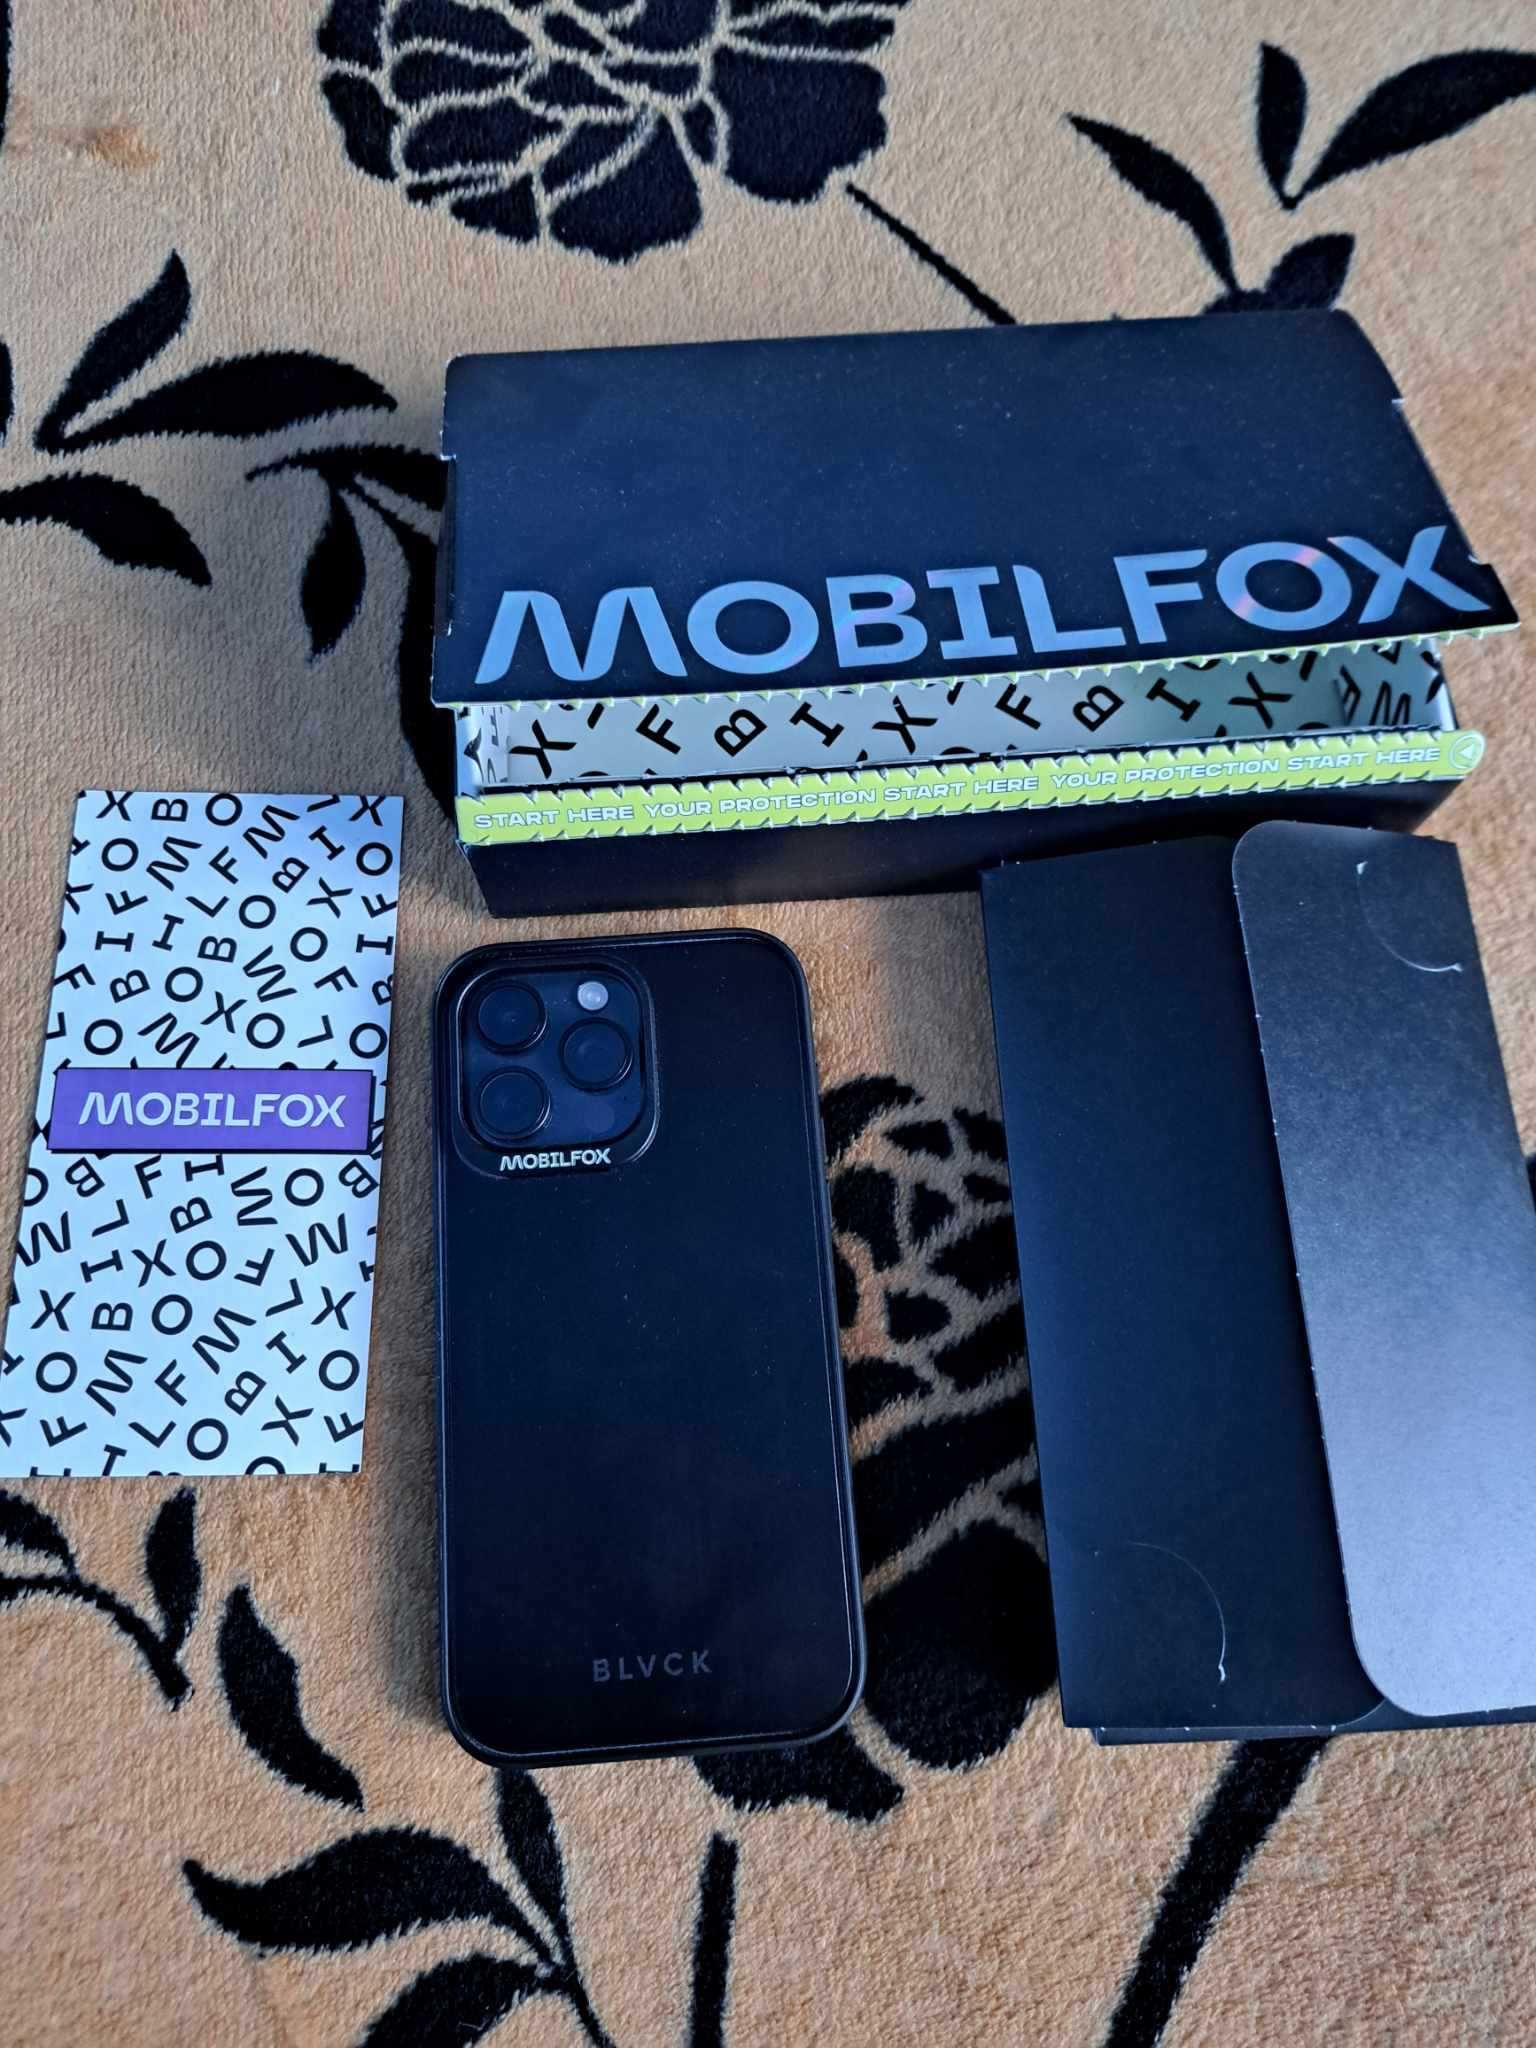 Vand husa mobil fox pentru iphone 15 pro max